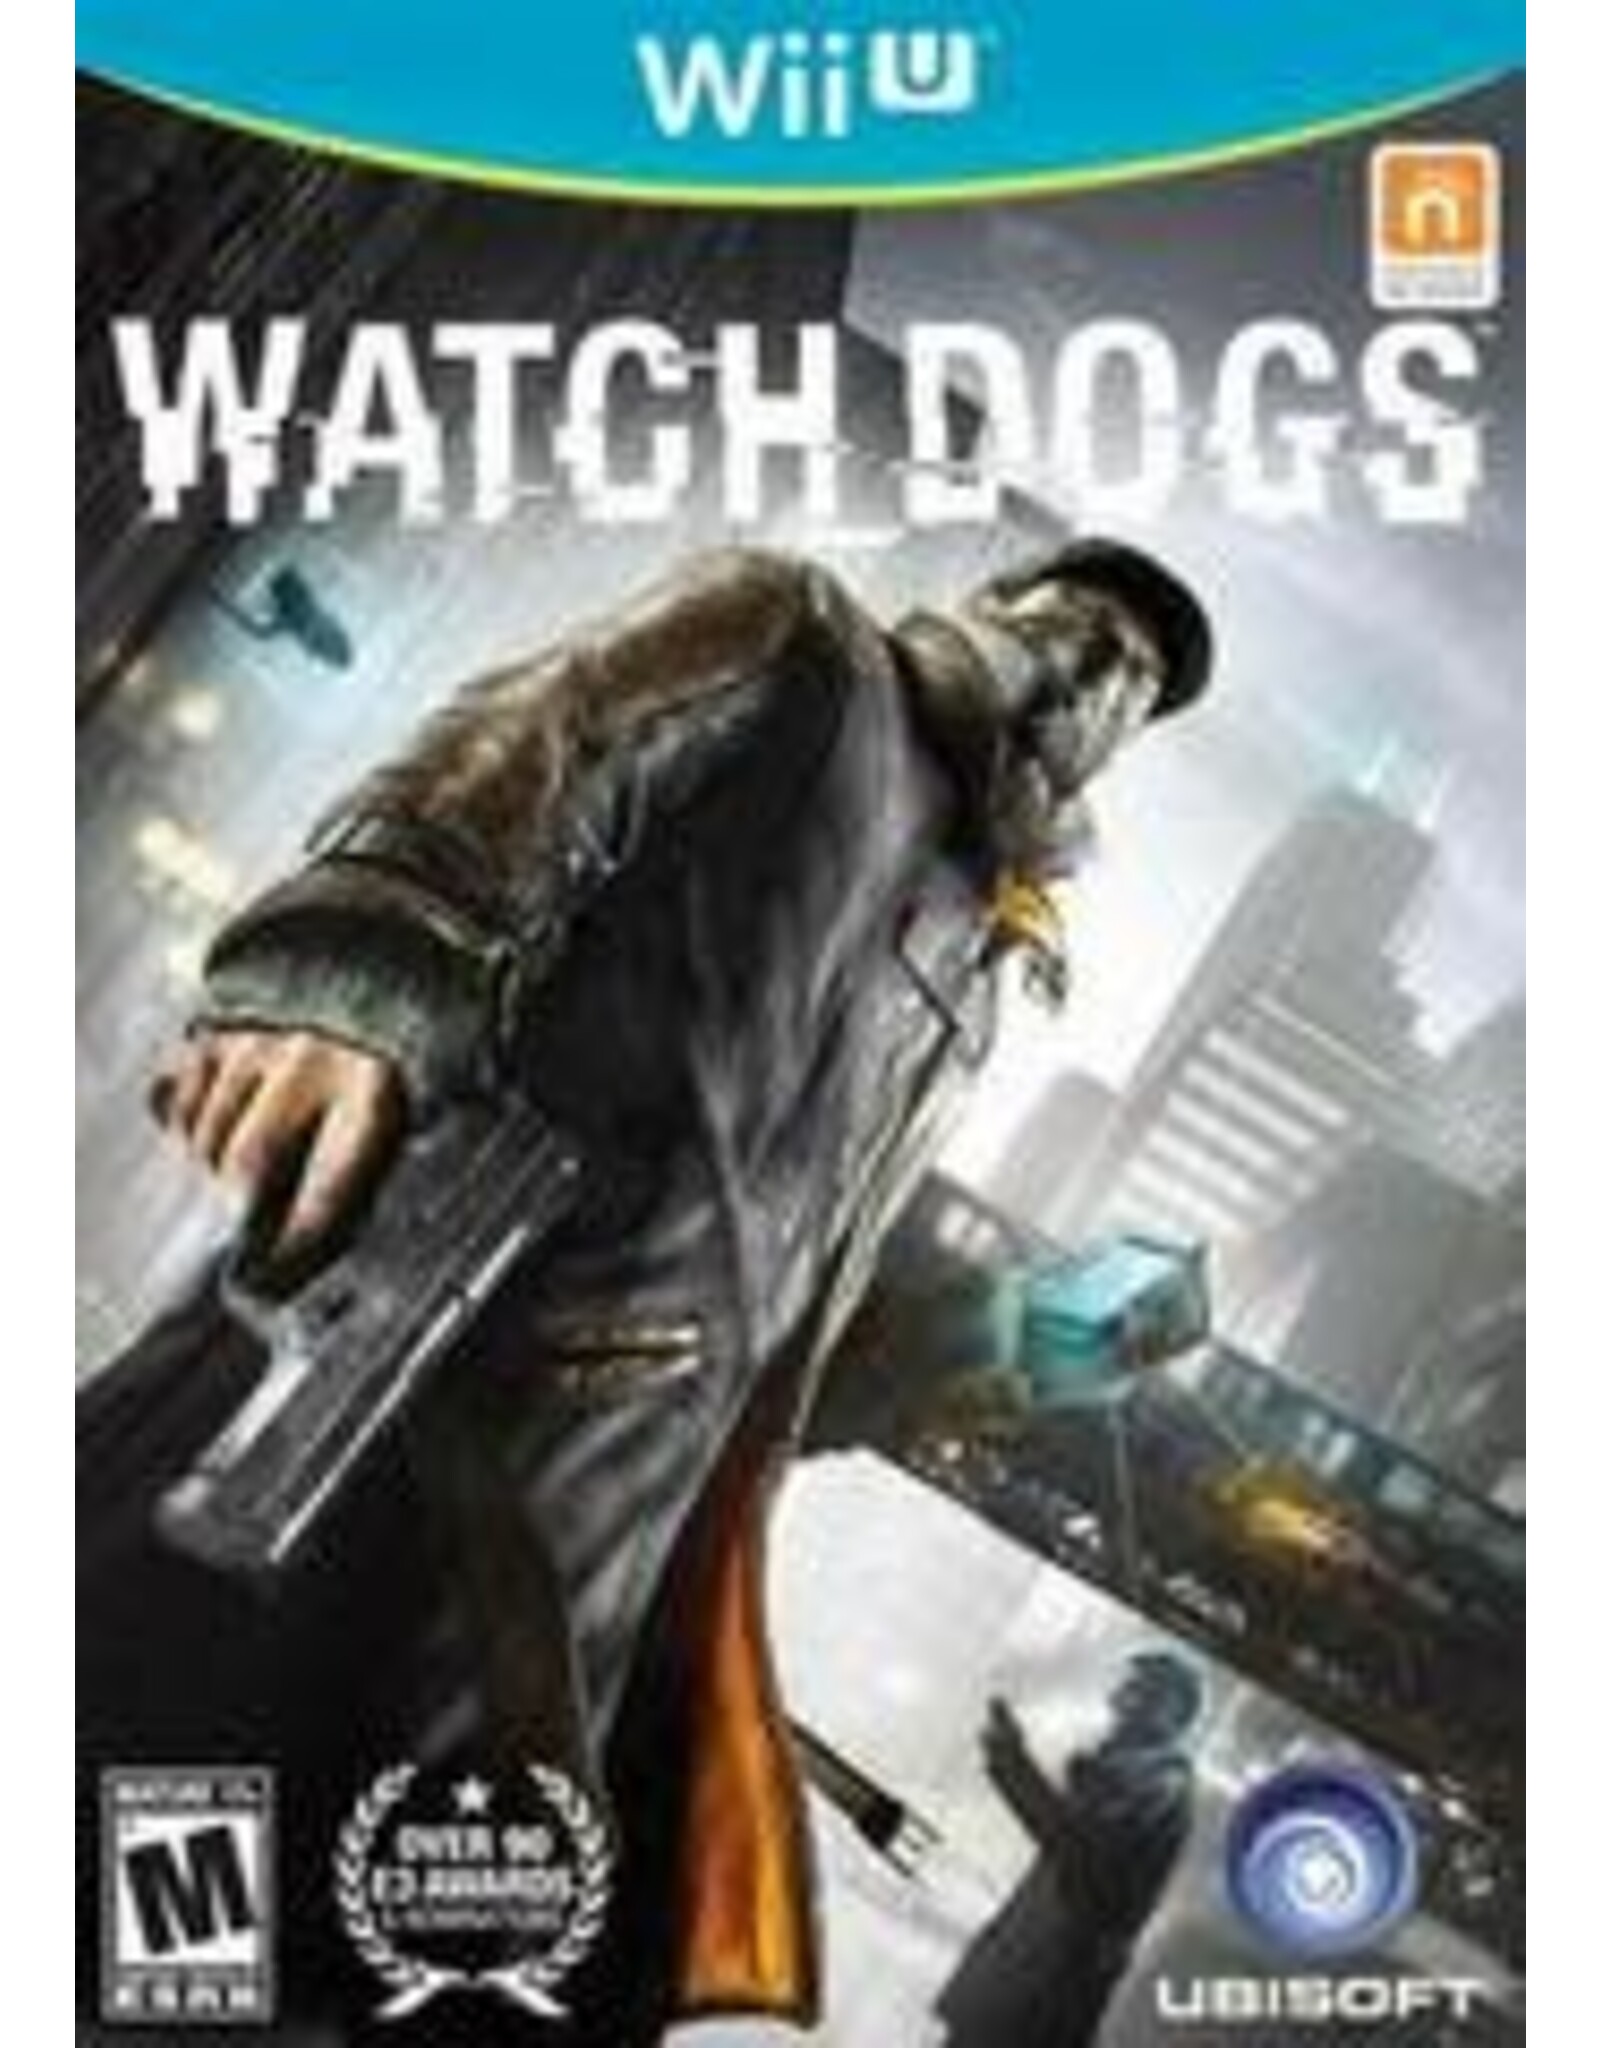 Wii U Watch Dogs (CiB)